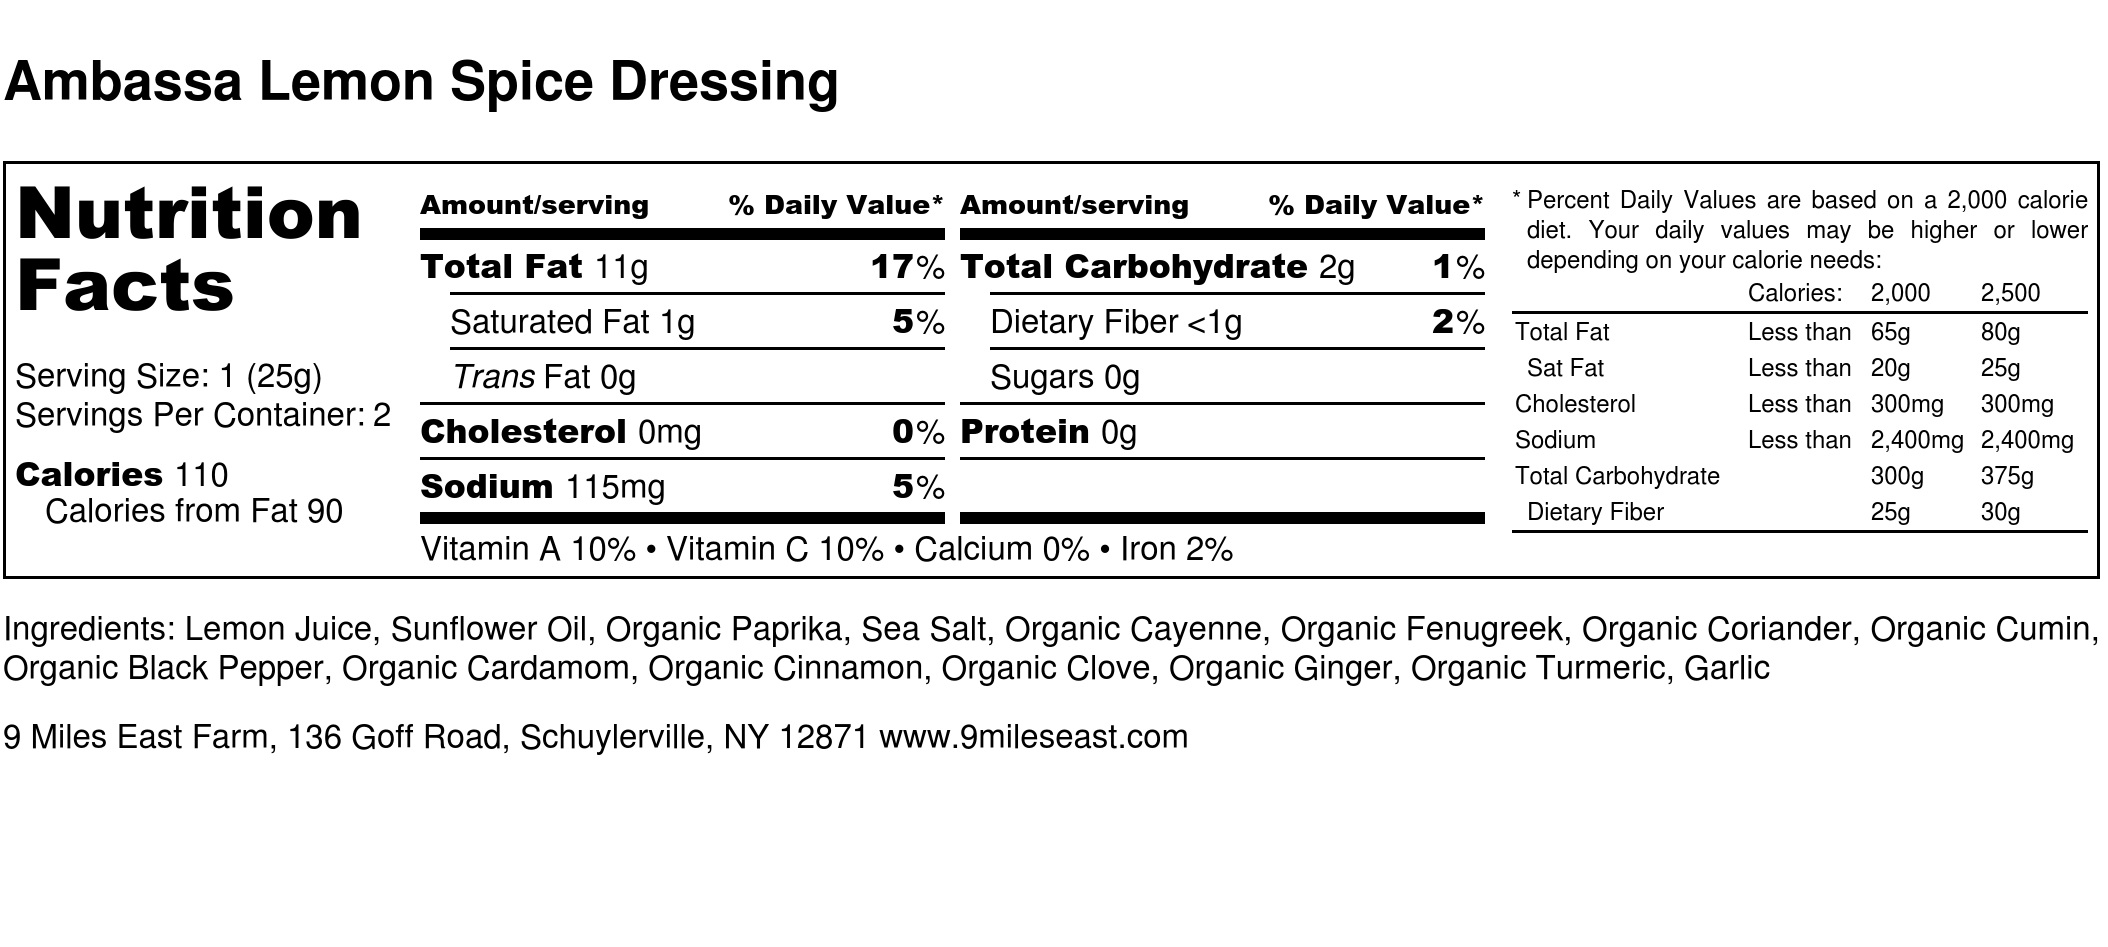 Ambassa Lemon Spice Dressing - Nutrition Label.jpg